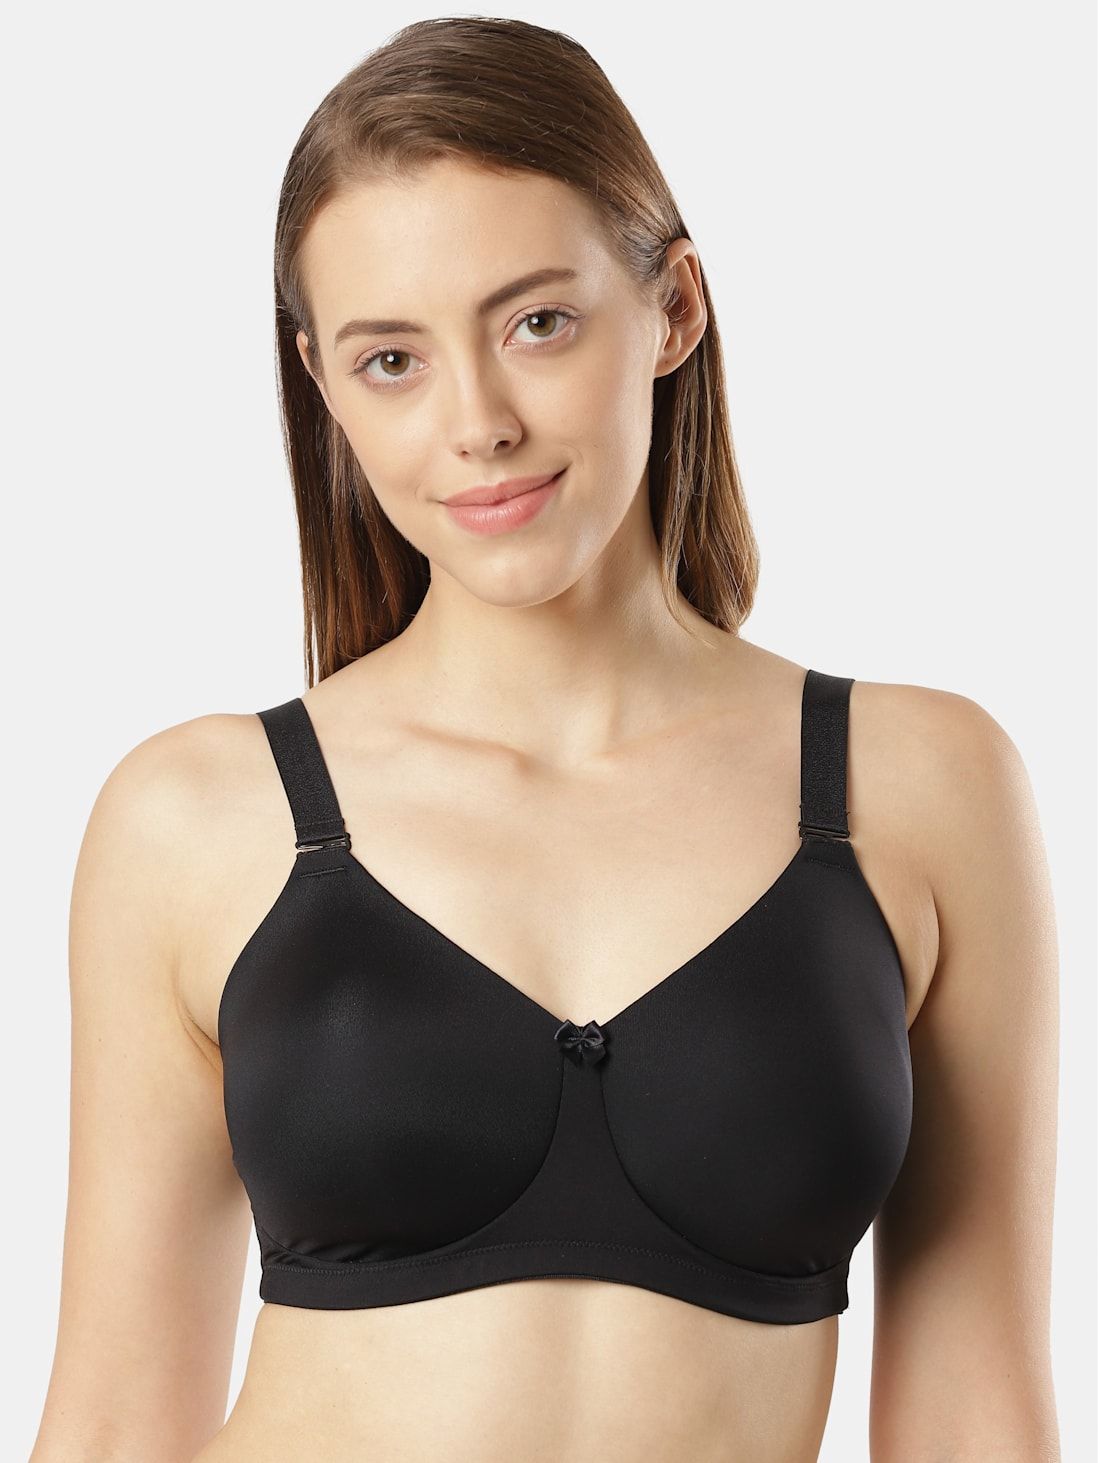 Zivame Bra Shopping Try On Haul for heavy bust size / Top 5 bras for heavy  bust size 